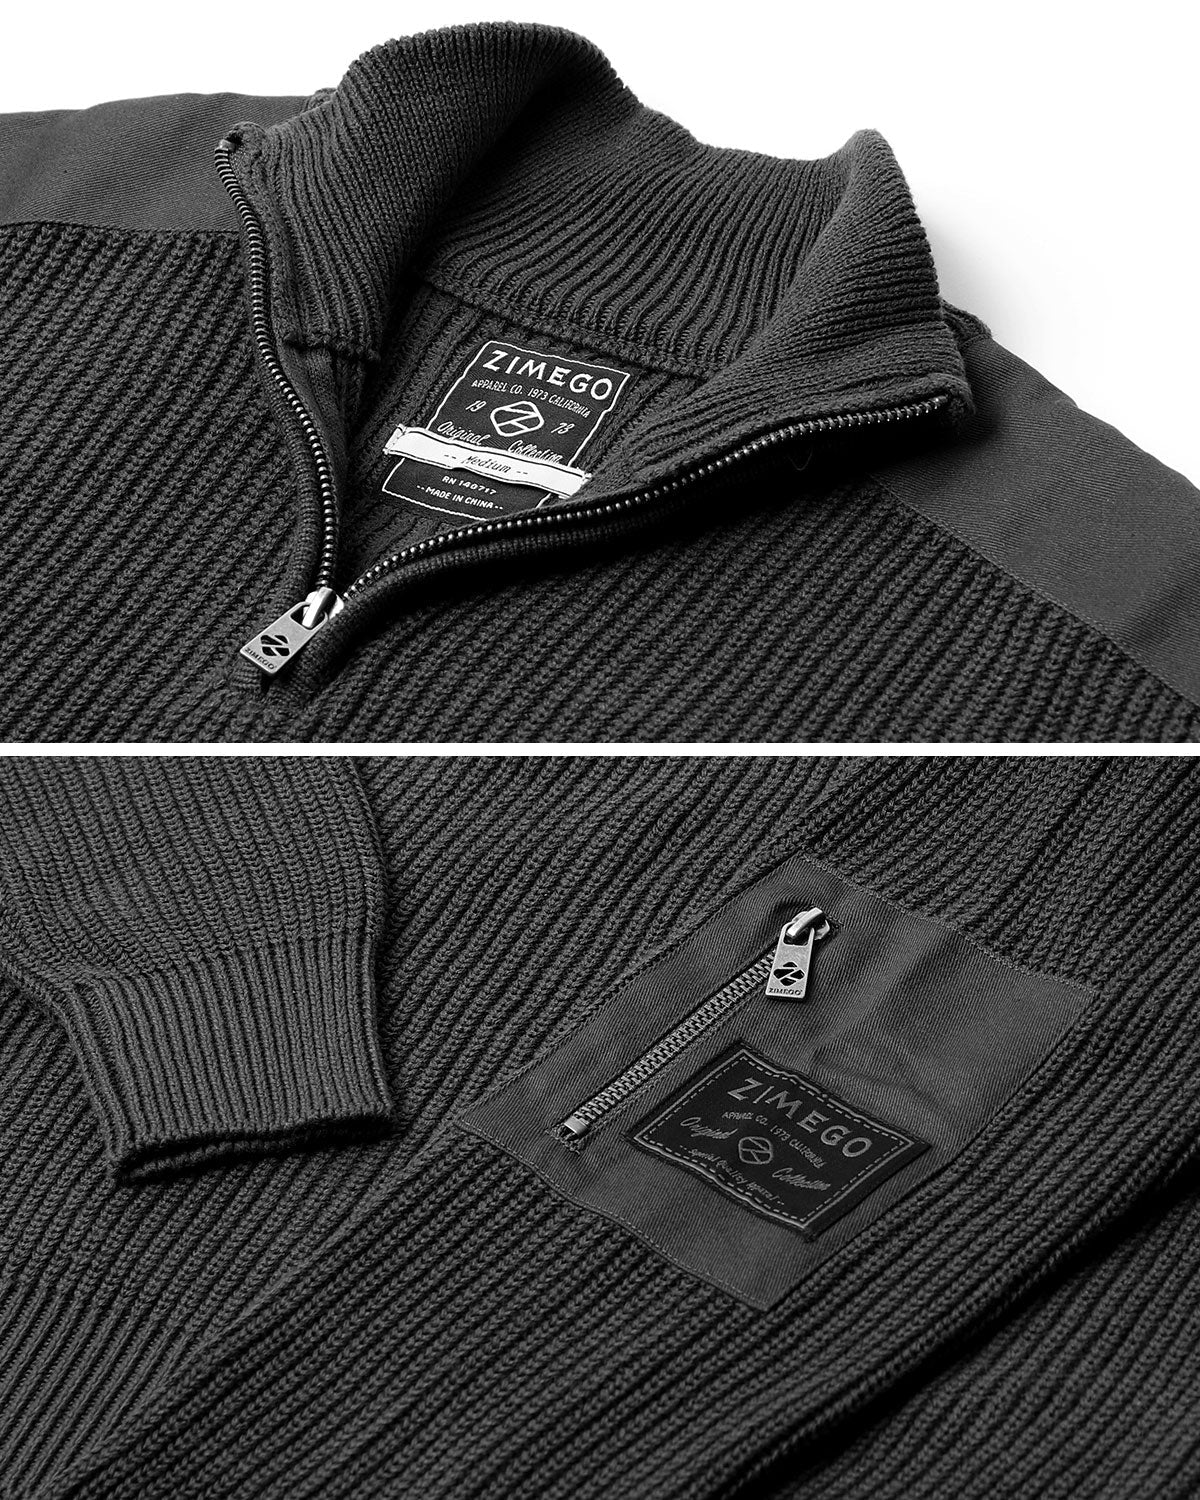 Men's Long Sleeve Pullover Quarter Zip Mock Neck Polo Sweater Black